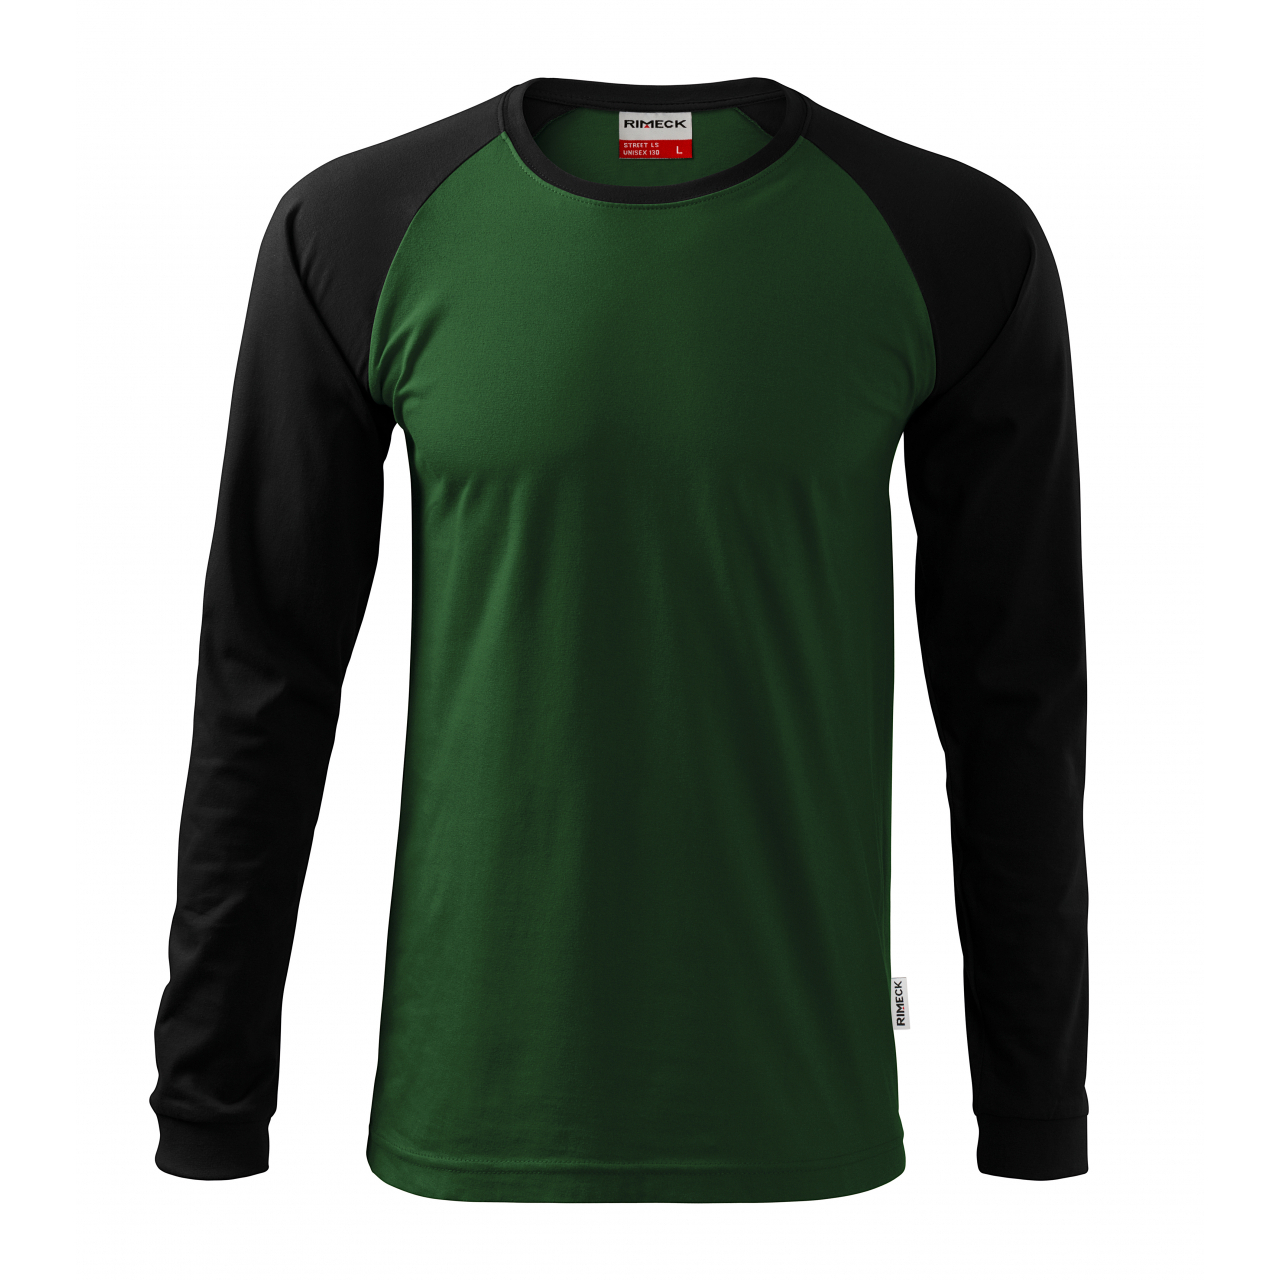 Tričko unisex Rimeck Street Long Sleeve - zelené-černé, 3XL